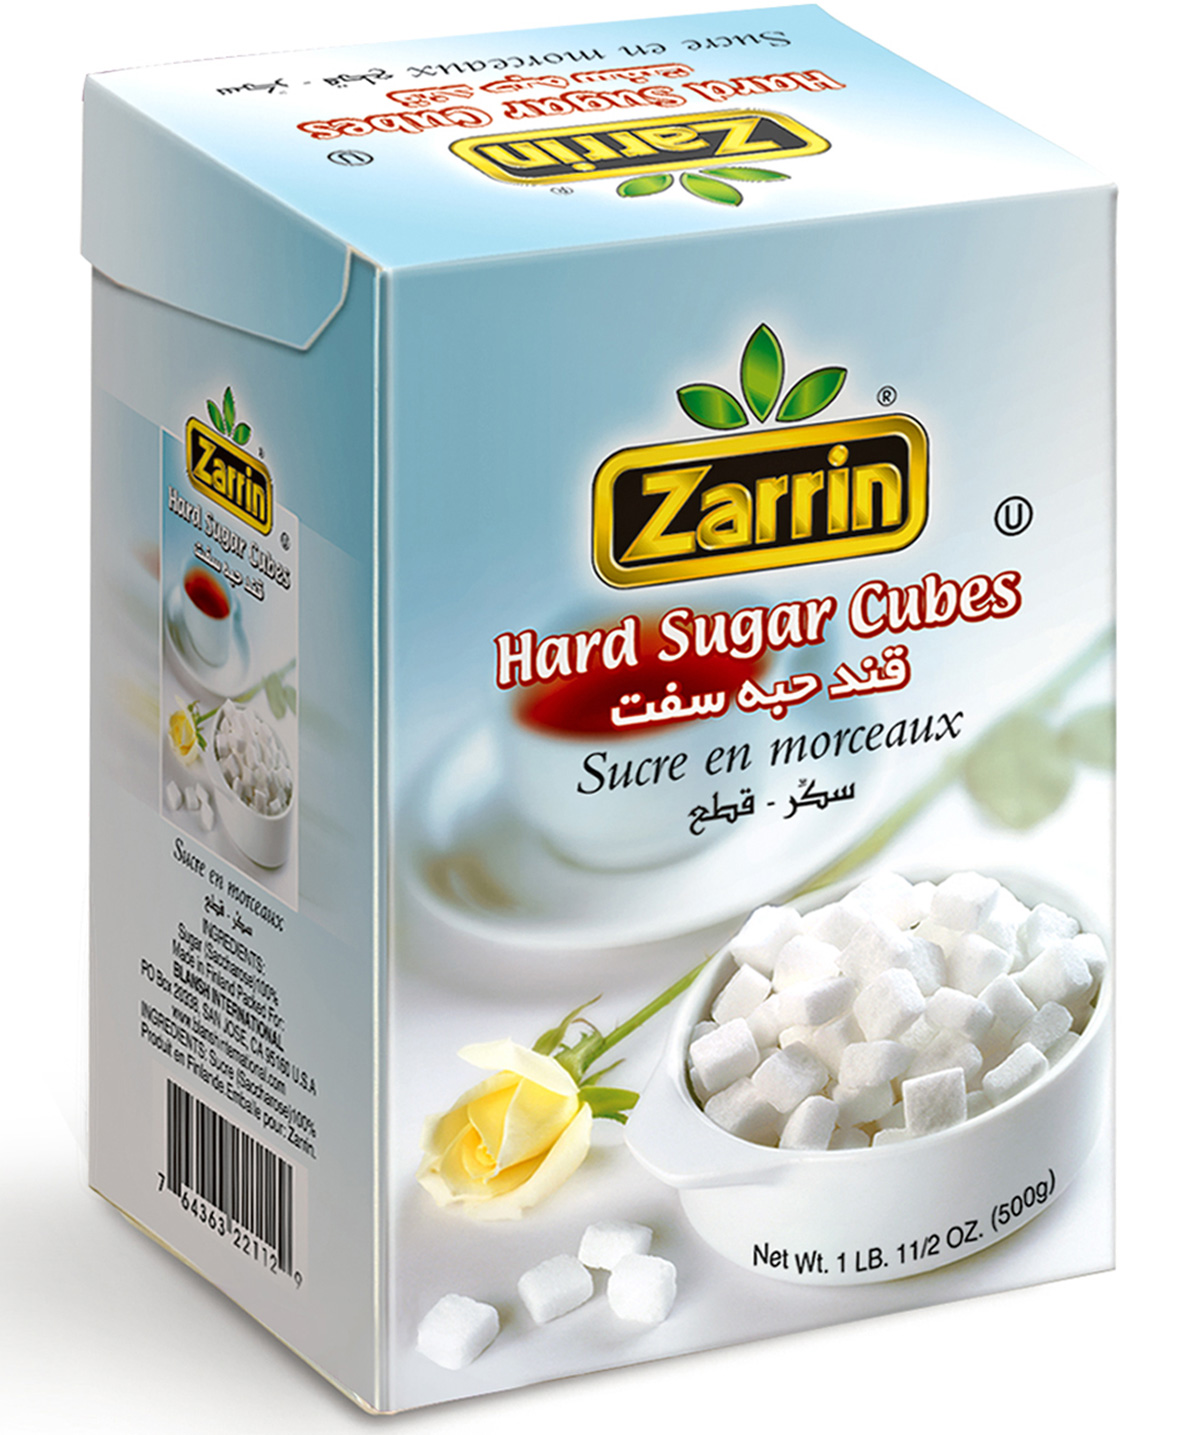 Zarrin Hard Sugar Cubes Packet